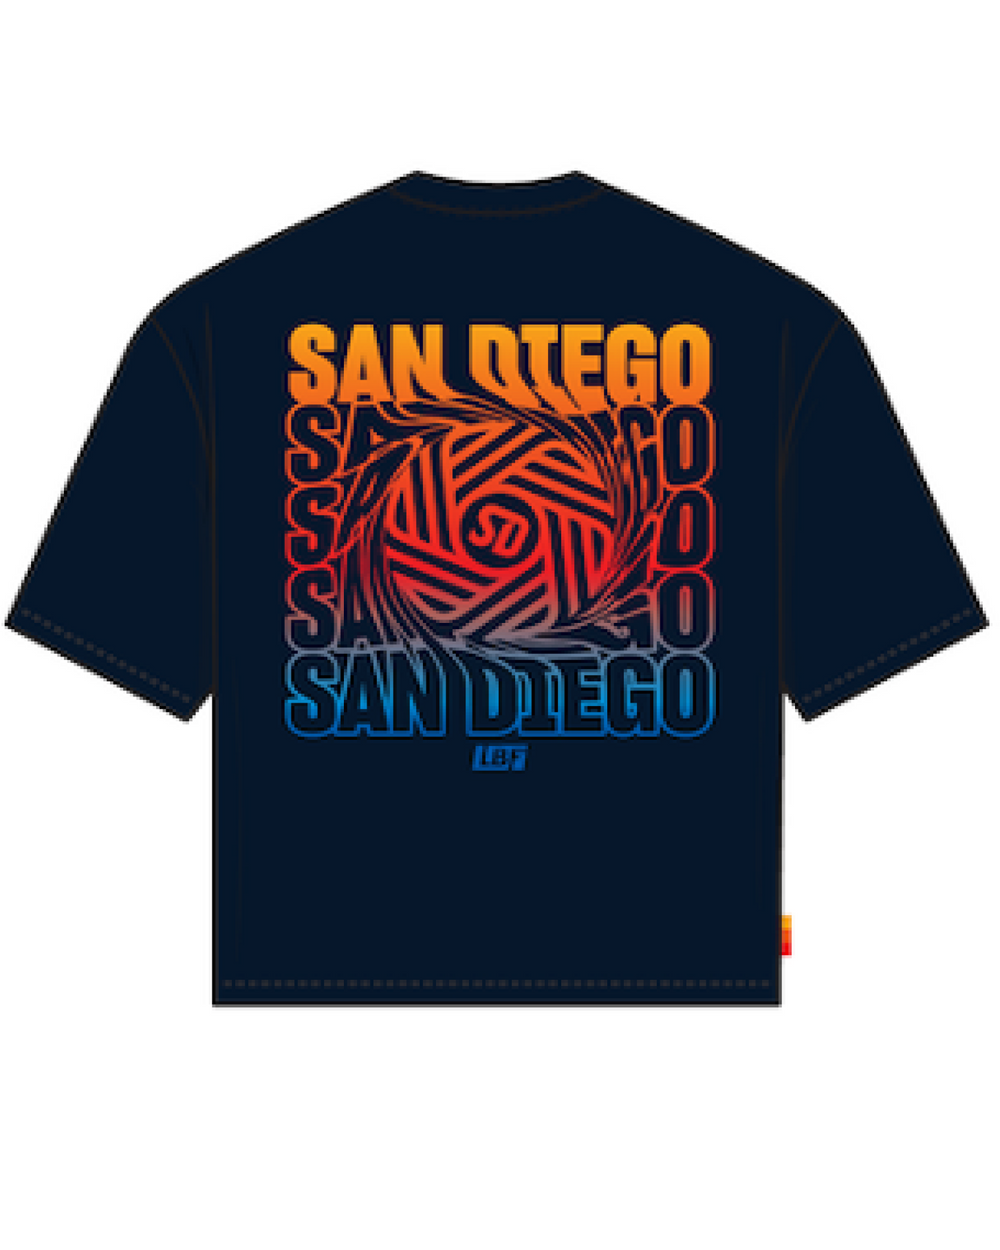 San Diego FC x LBF Crest T-shirt Navy